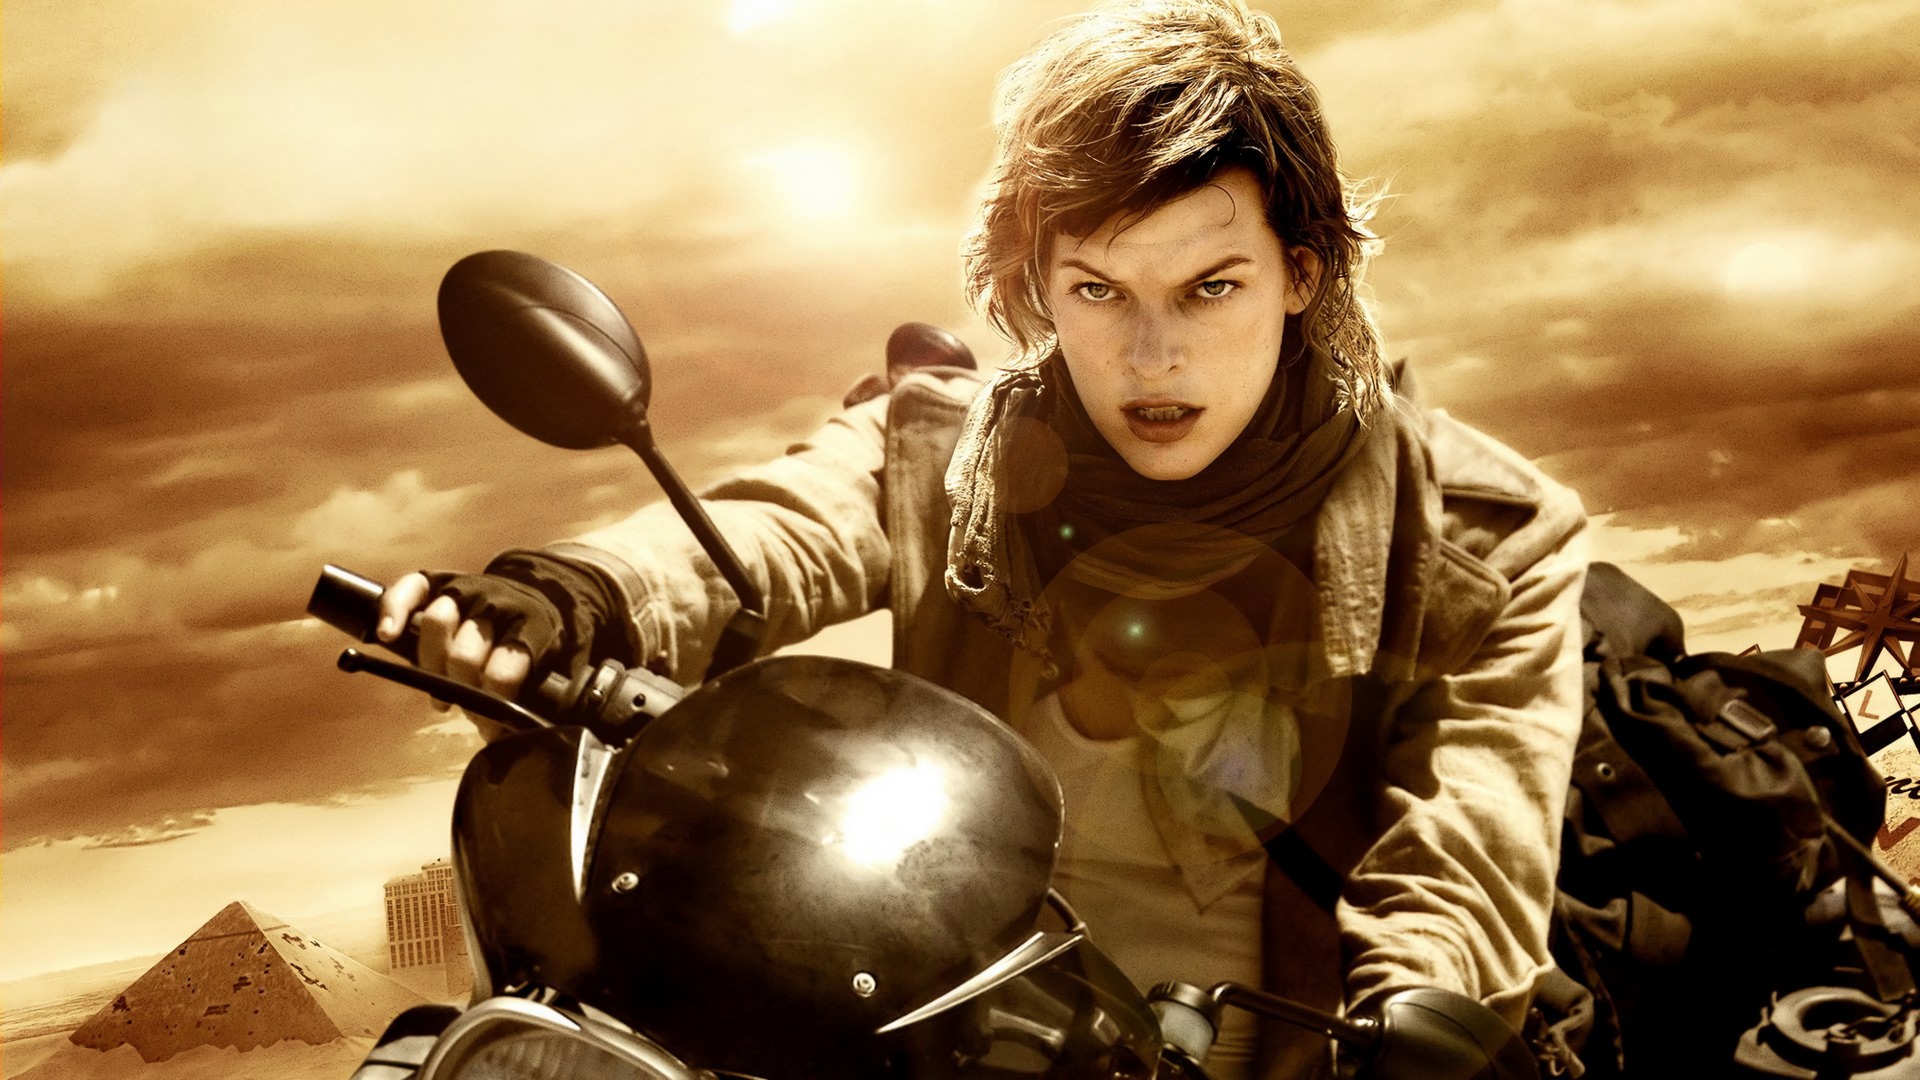 Wallpaper Milla Jovovich in Resident Evil: Extinction, 2017 movie